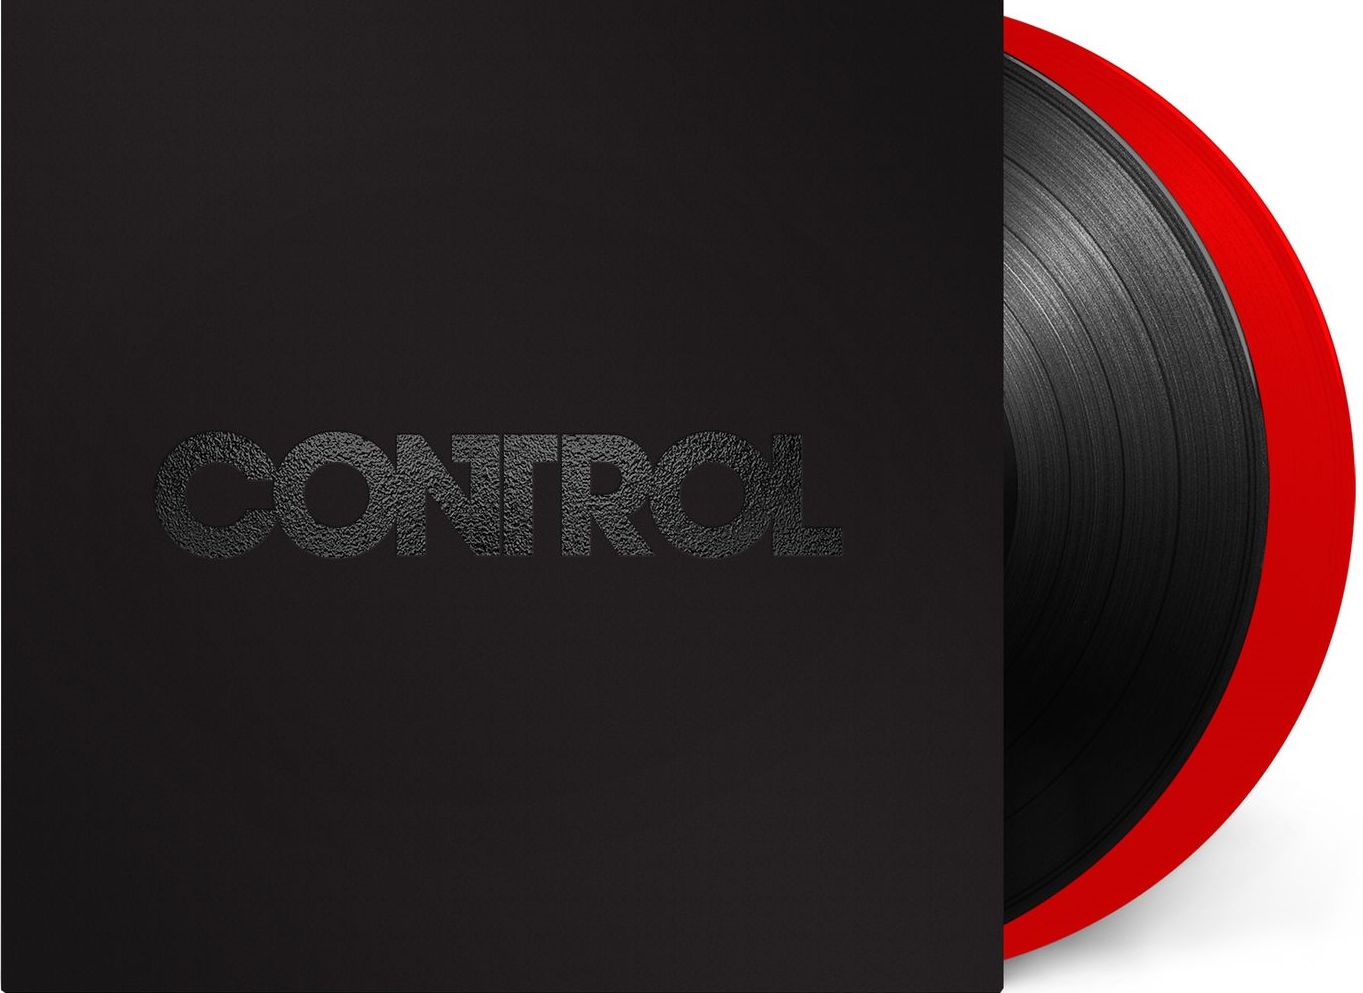 Control (Deluxe Double Vinyl)